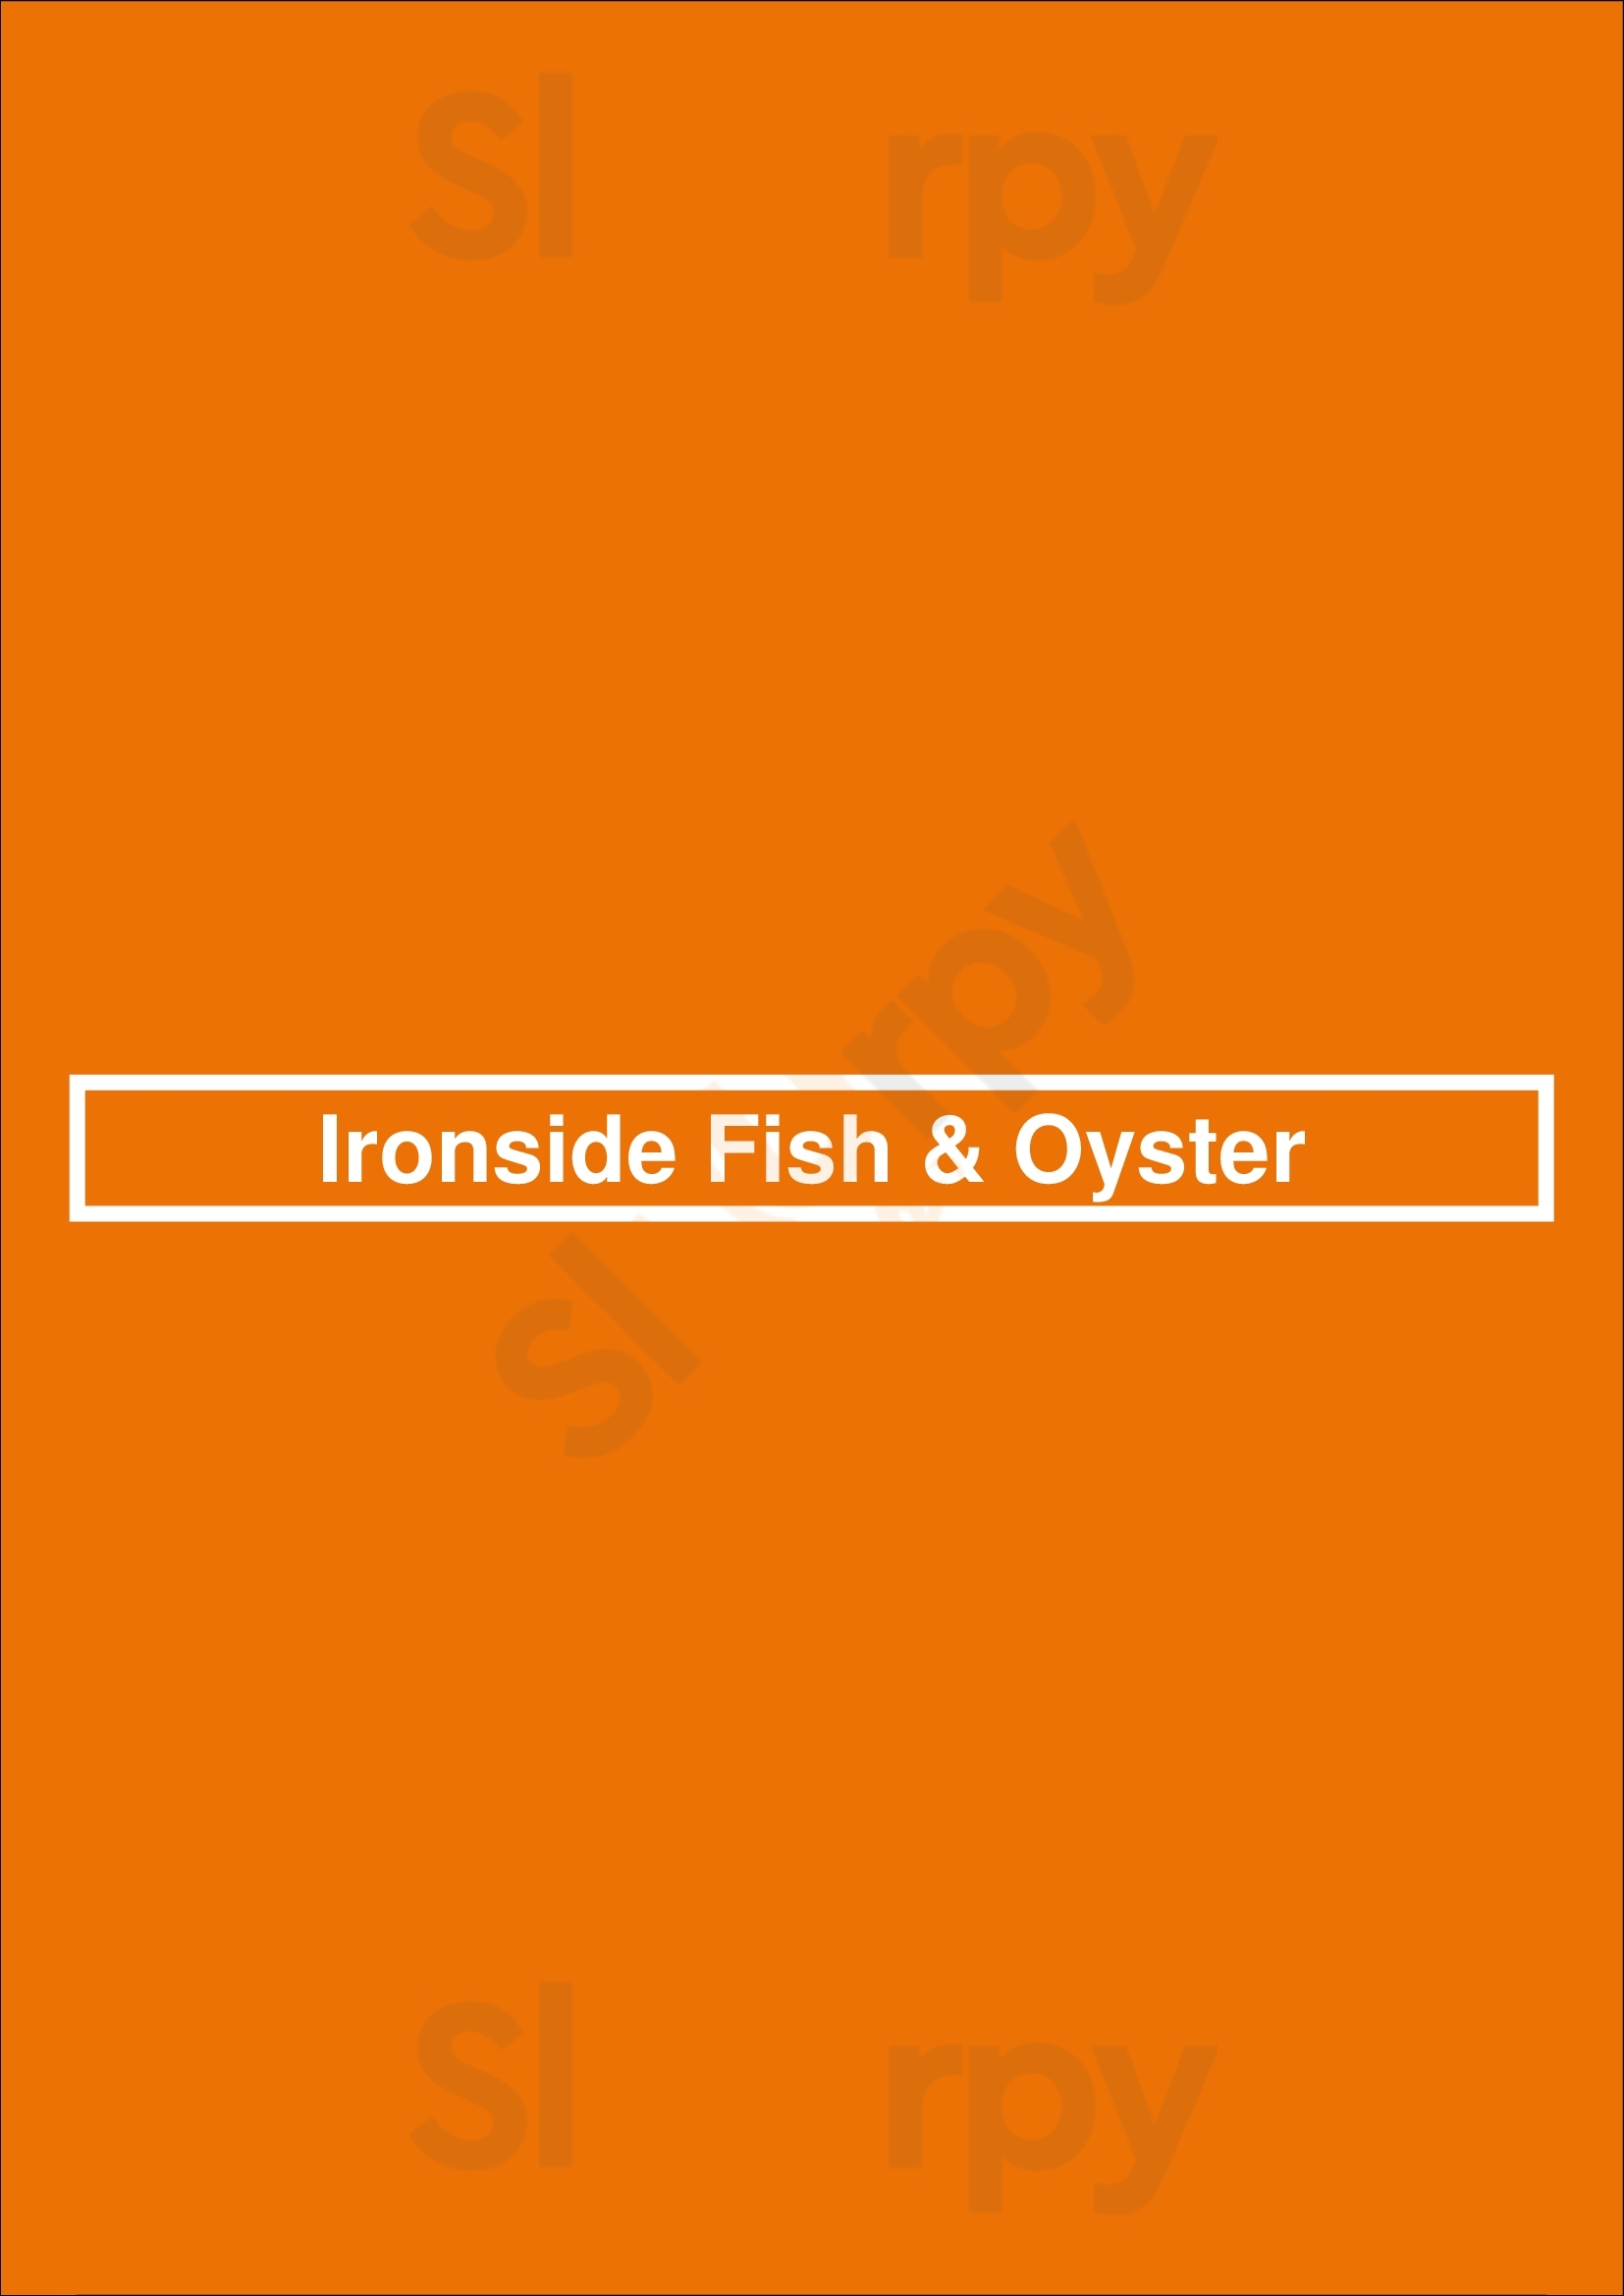 Ironside Fish & Oyster San Diego Menu - 1